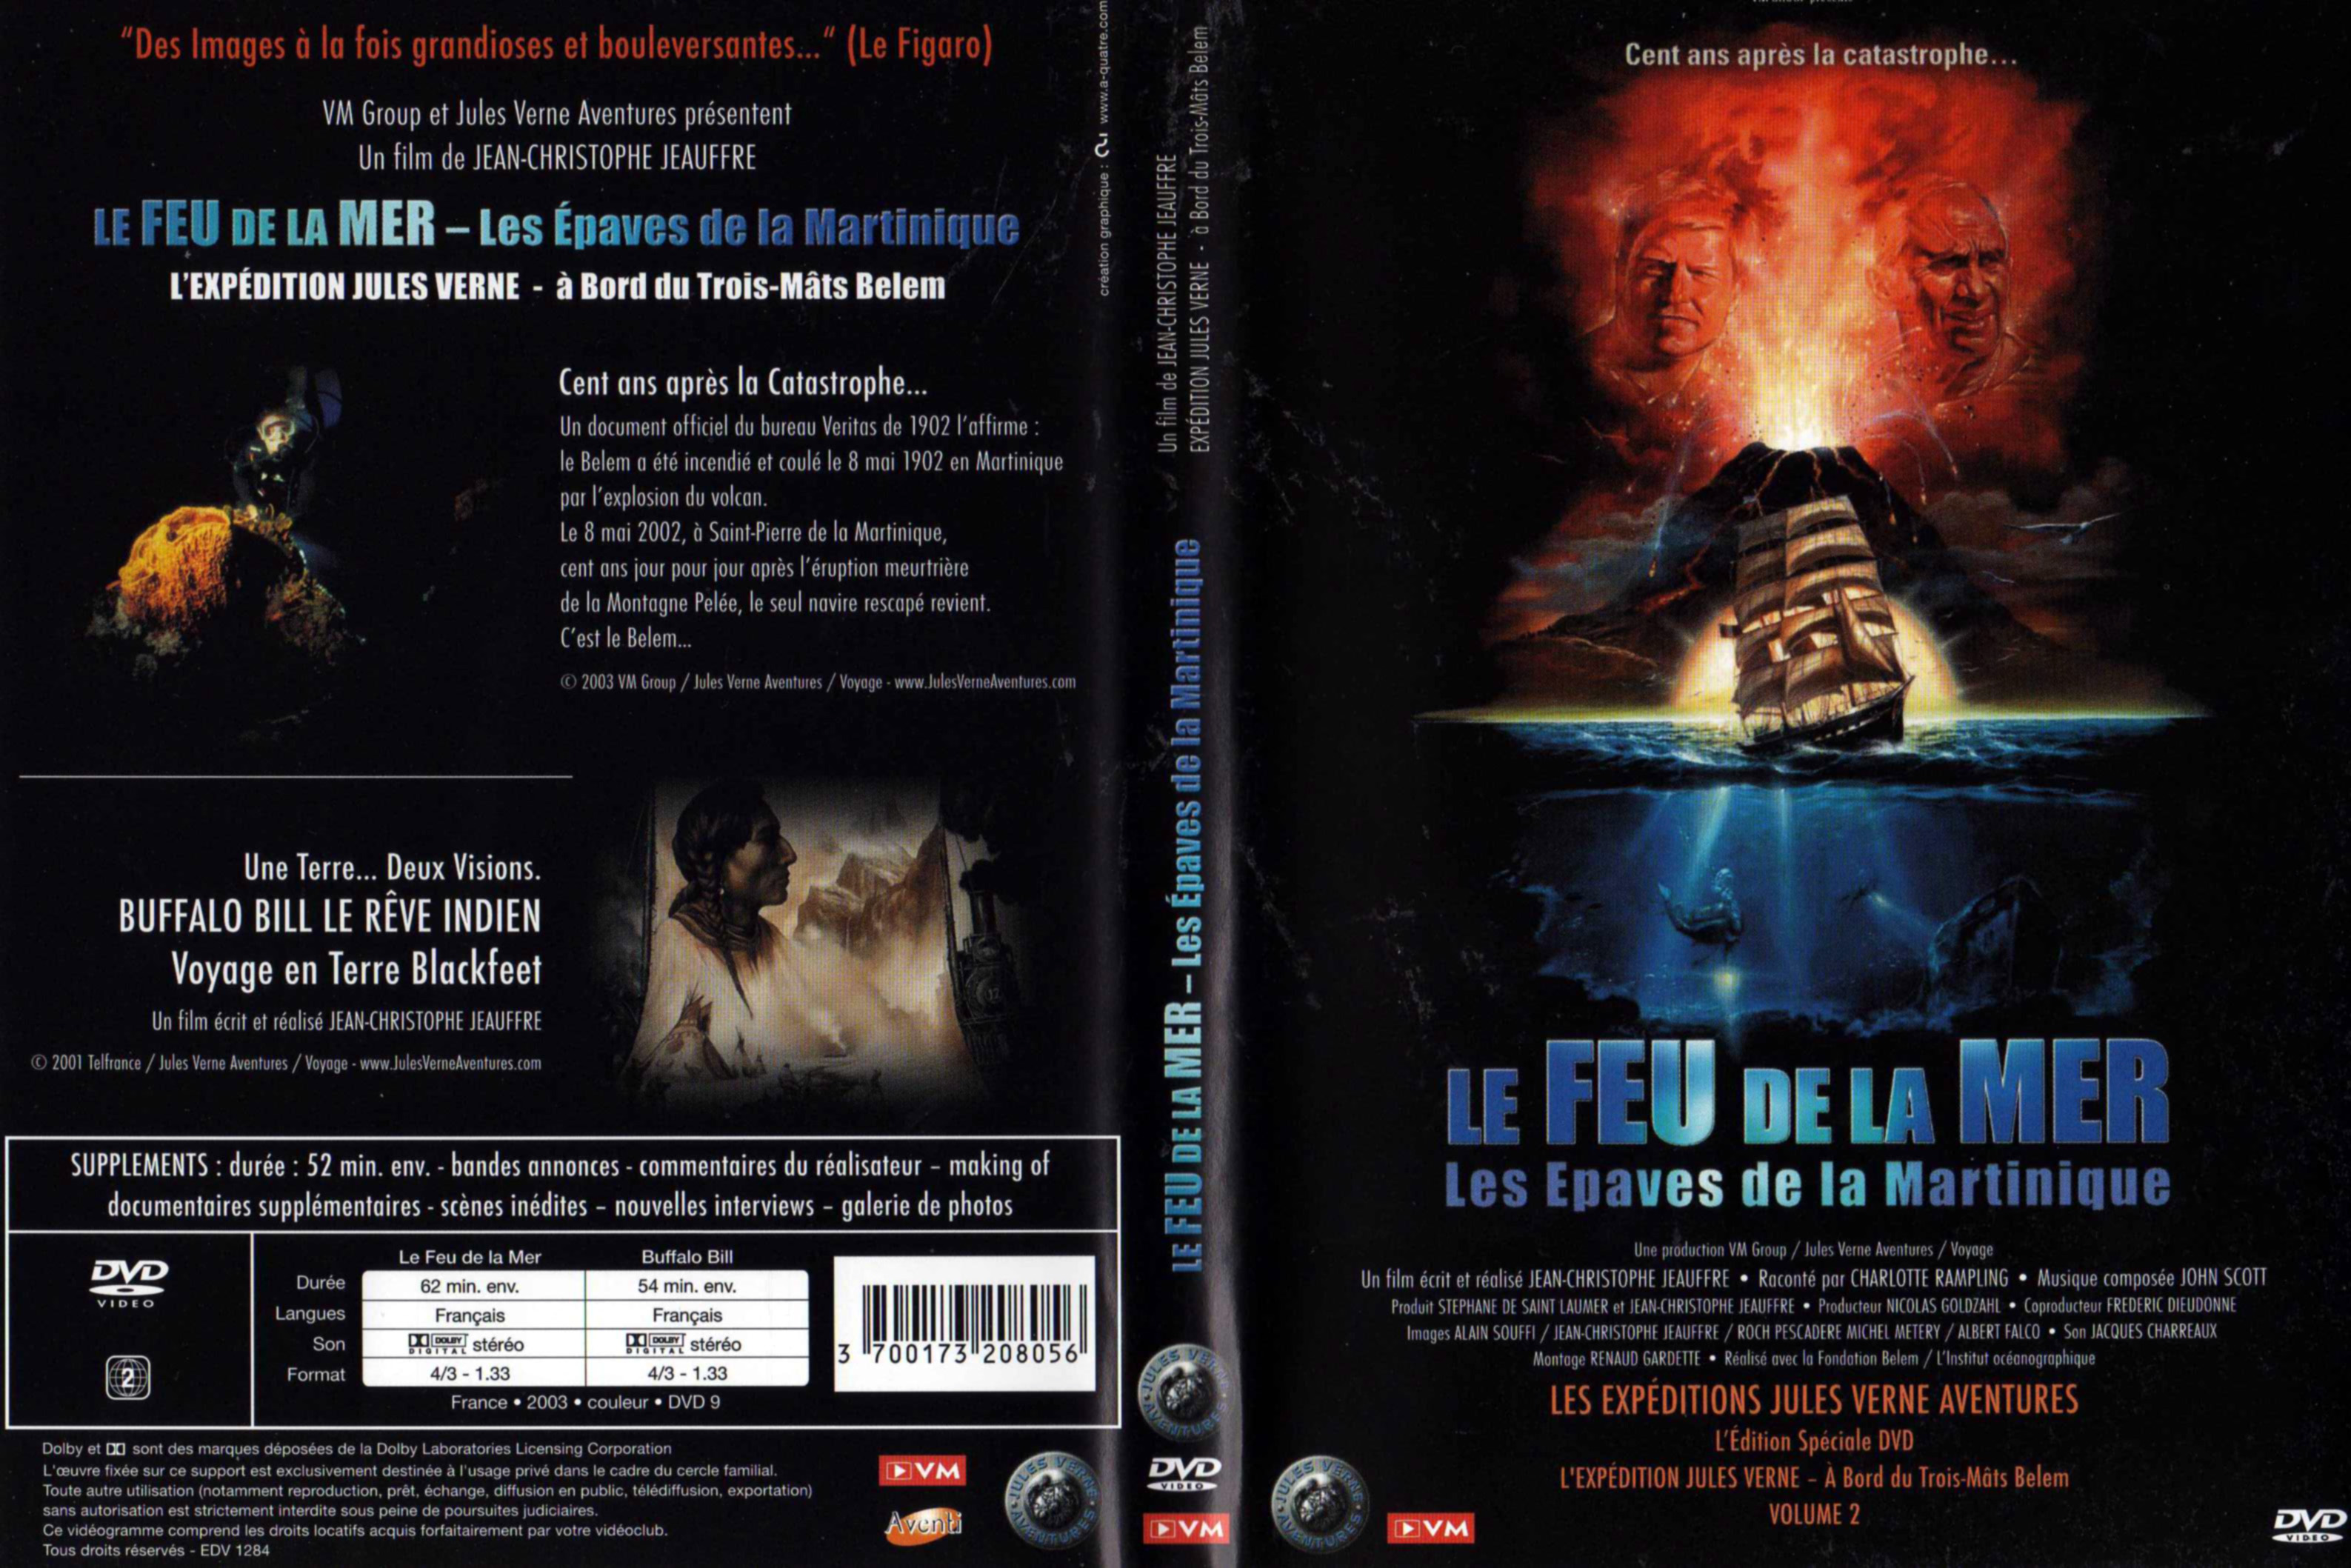 Jaquette DVD Les expditions Jules Verne - Le feu de la mer